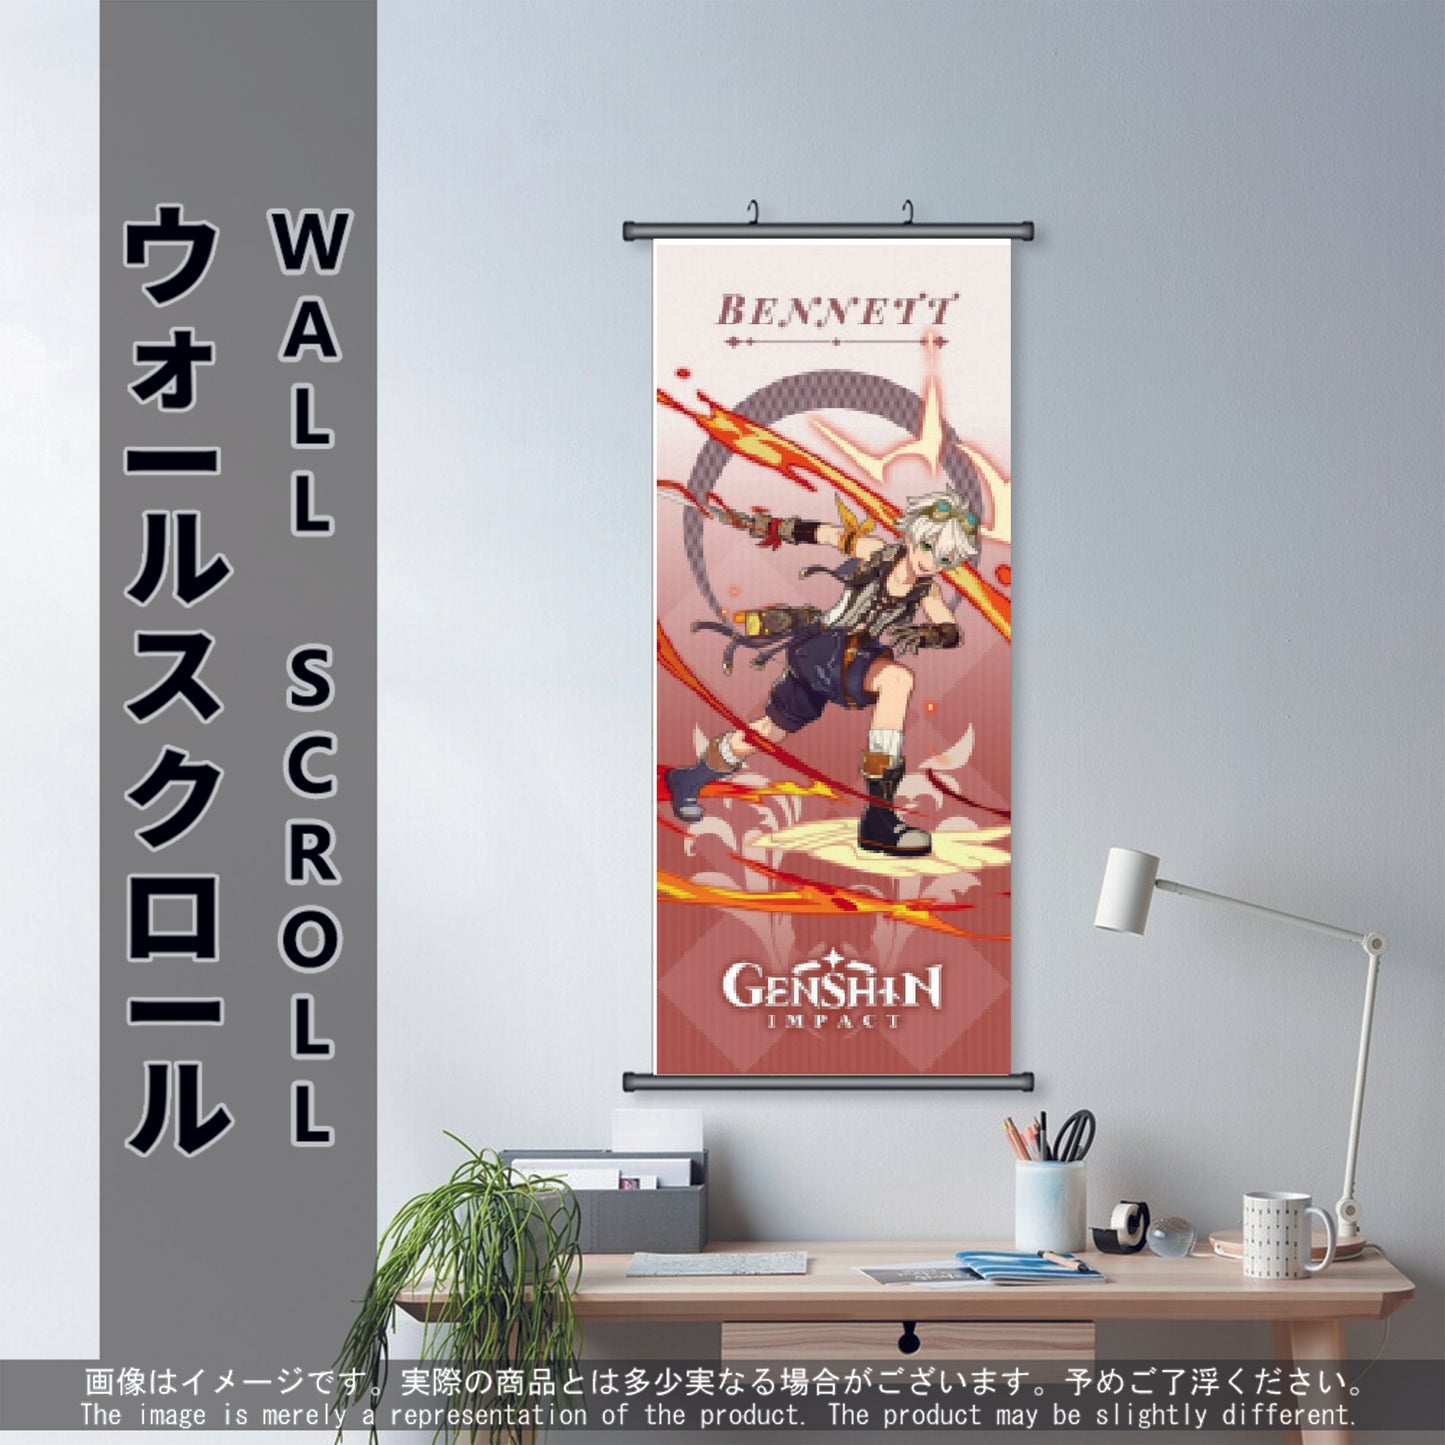 (GSN-PYRO-02) BENNET Genshin Impact Anime Wall Scroll